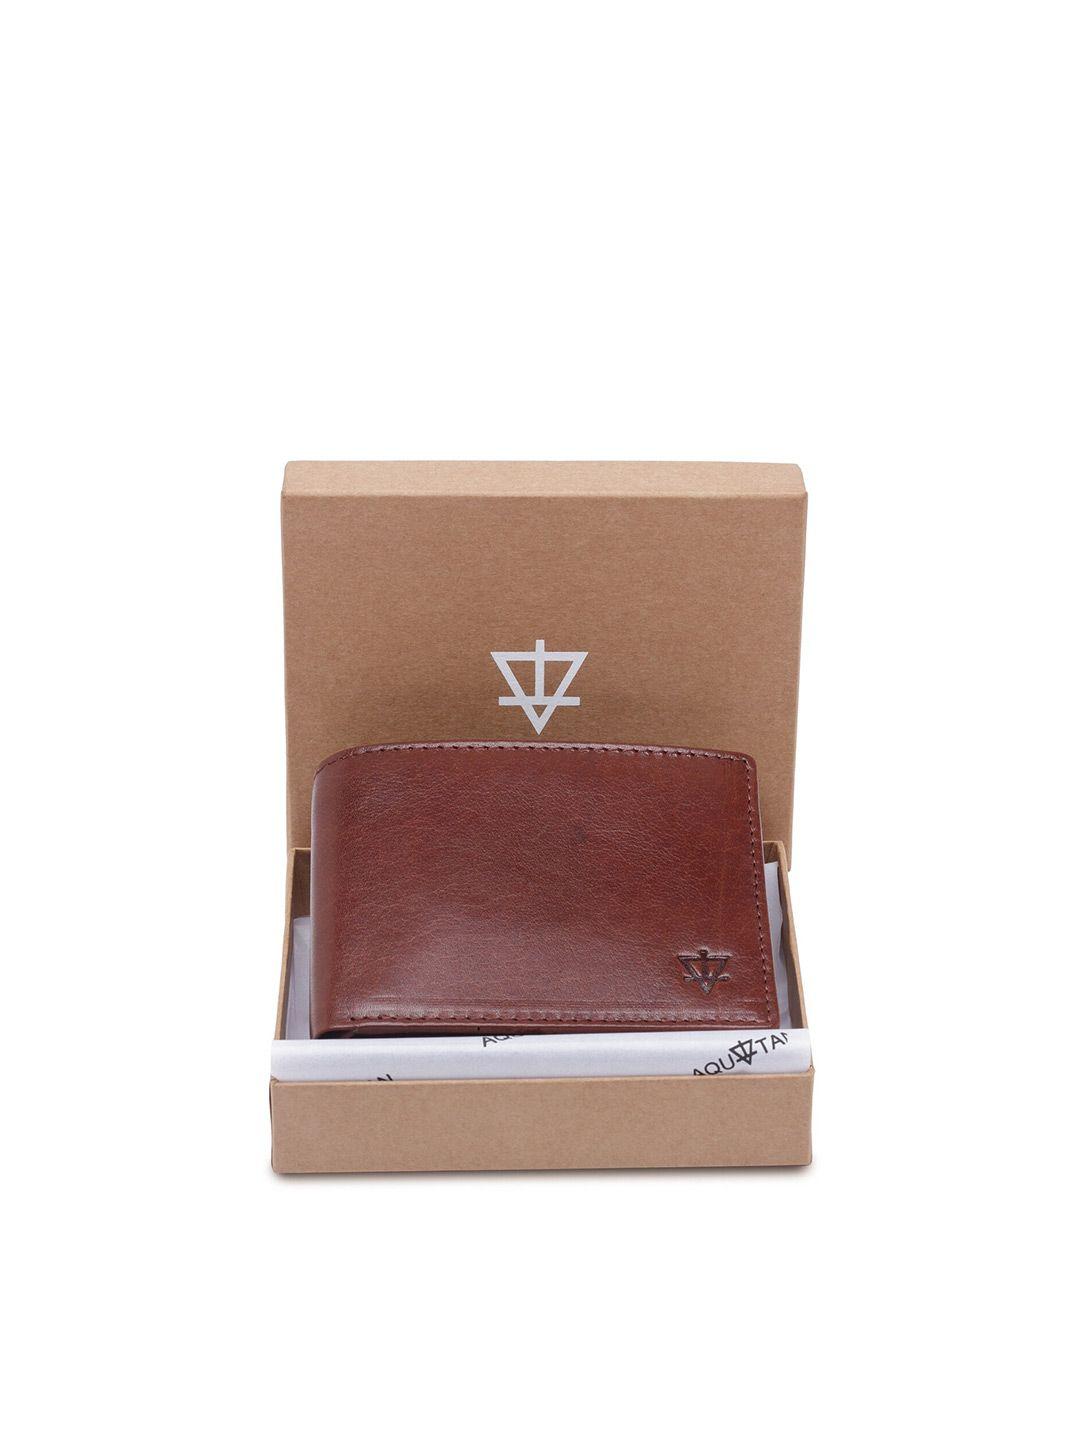 aquatan men genuine leather two fold wallet